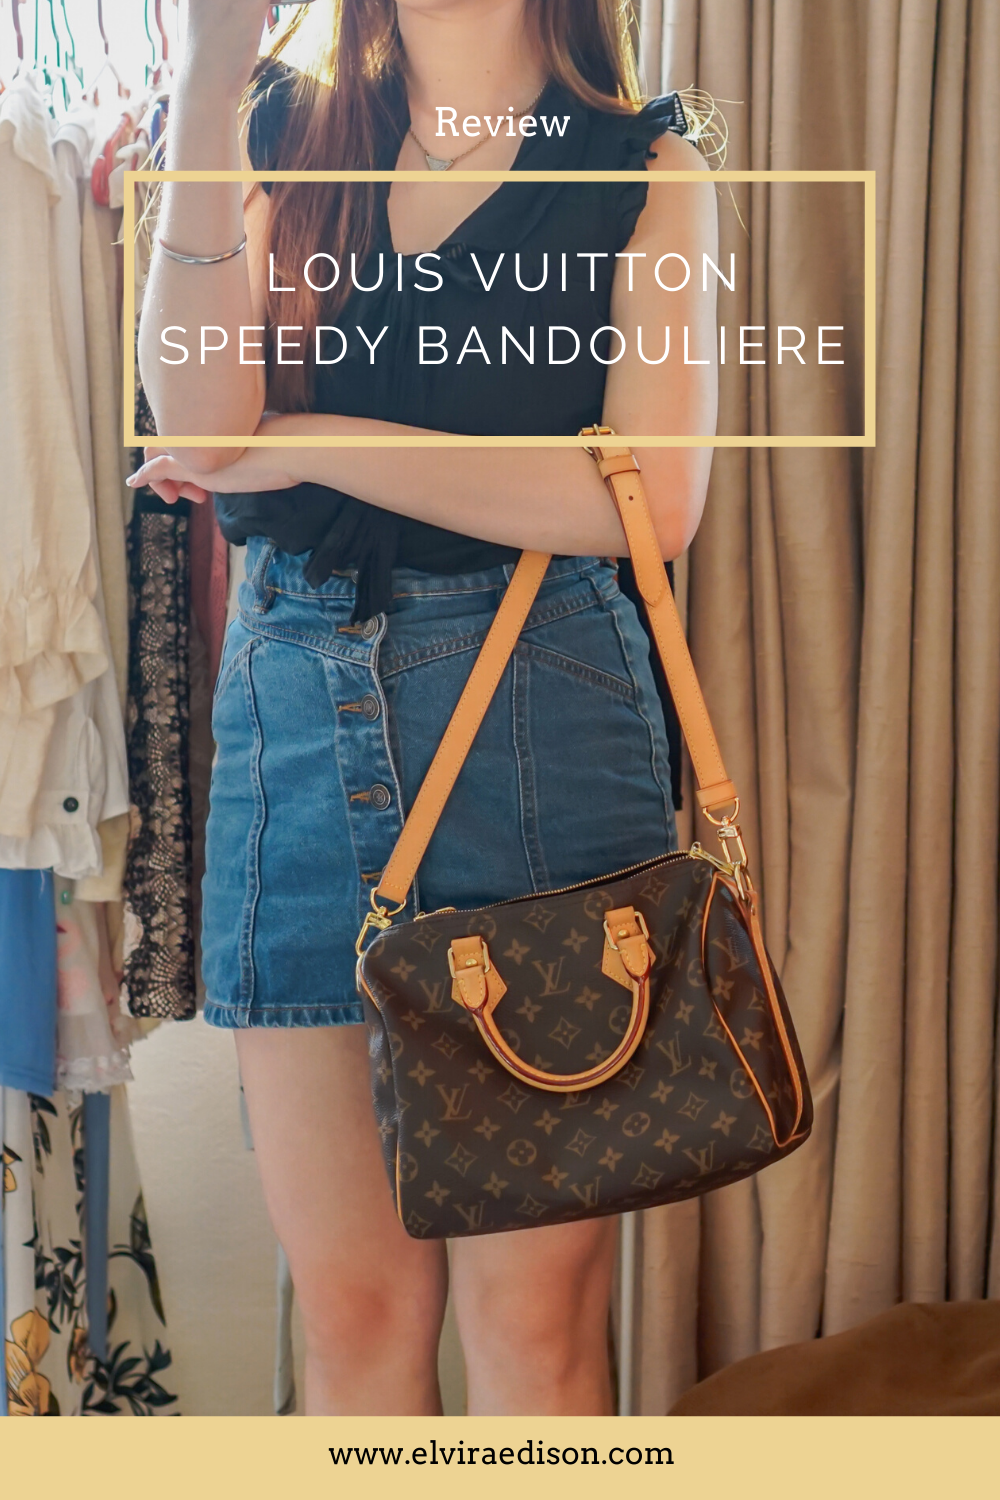 Louis Vuitton Speedy Bandoulière Review: Is It Worth it? - A Byers